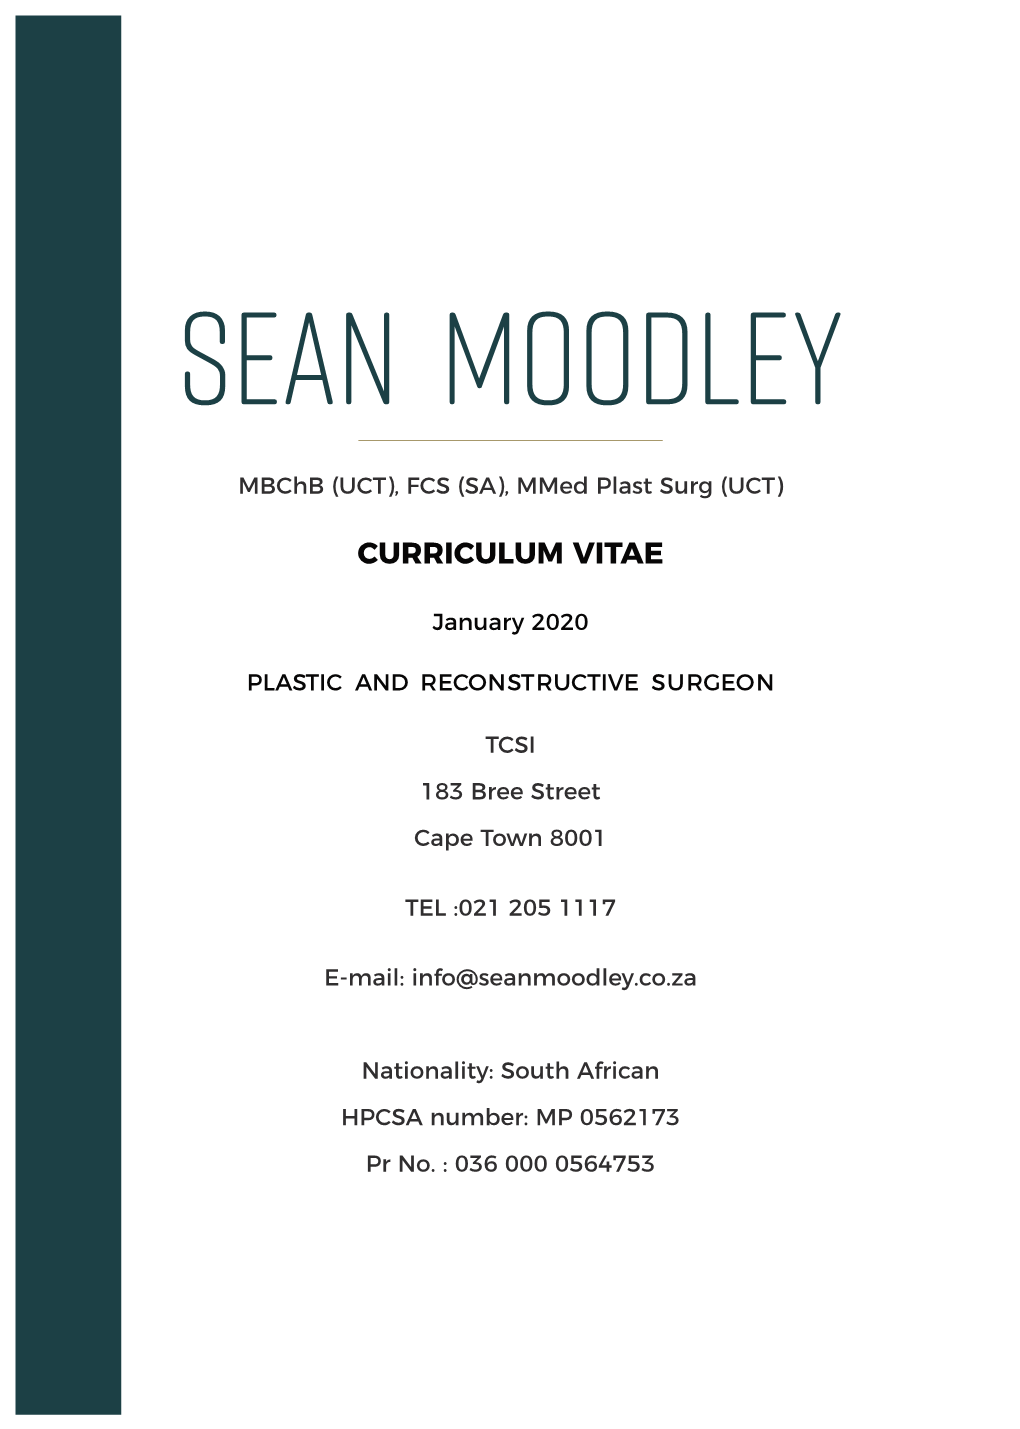 Dr Moodley CV